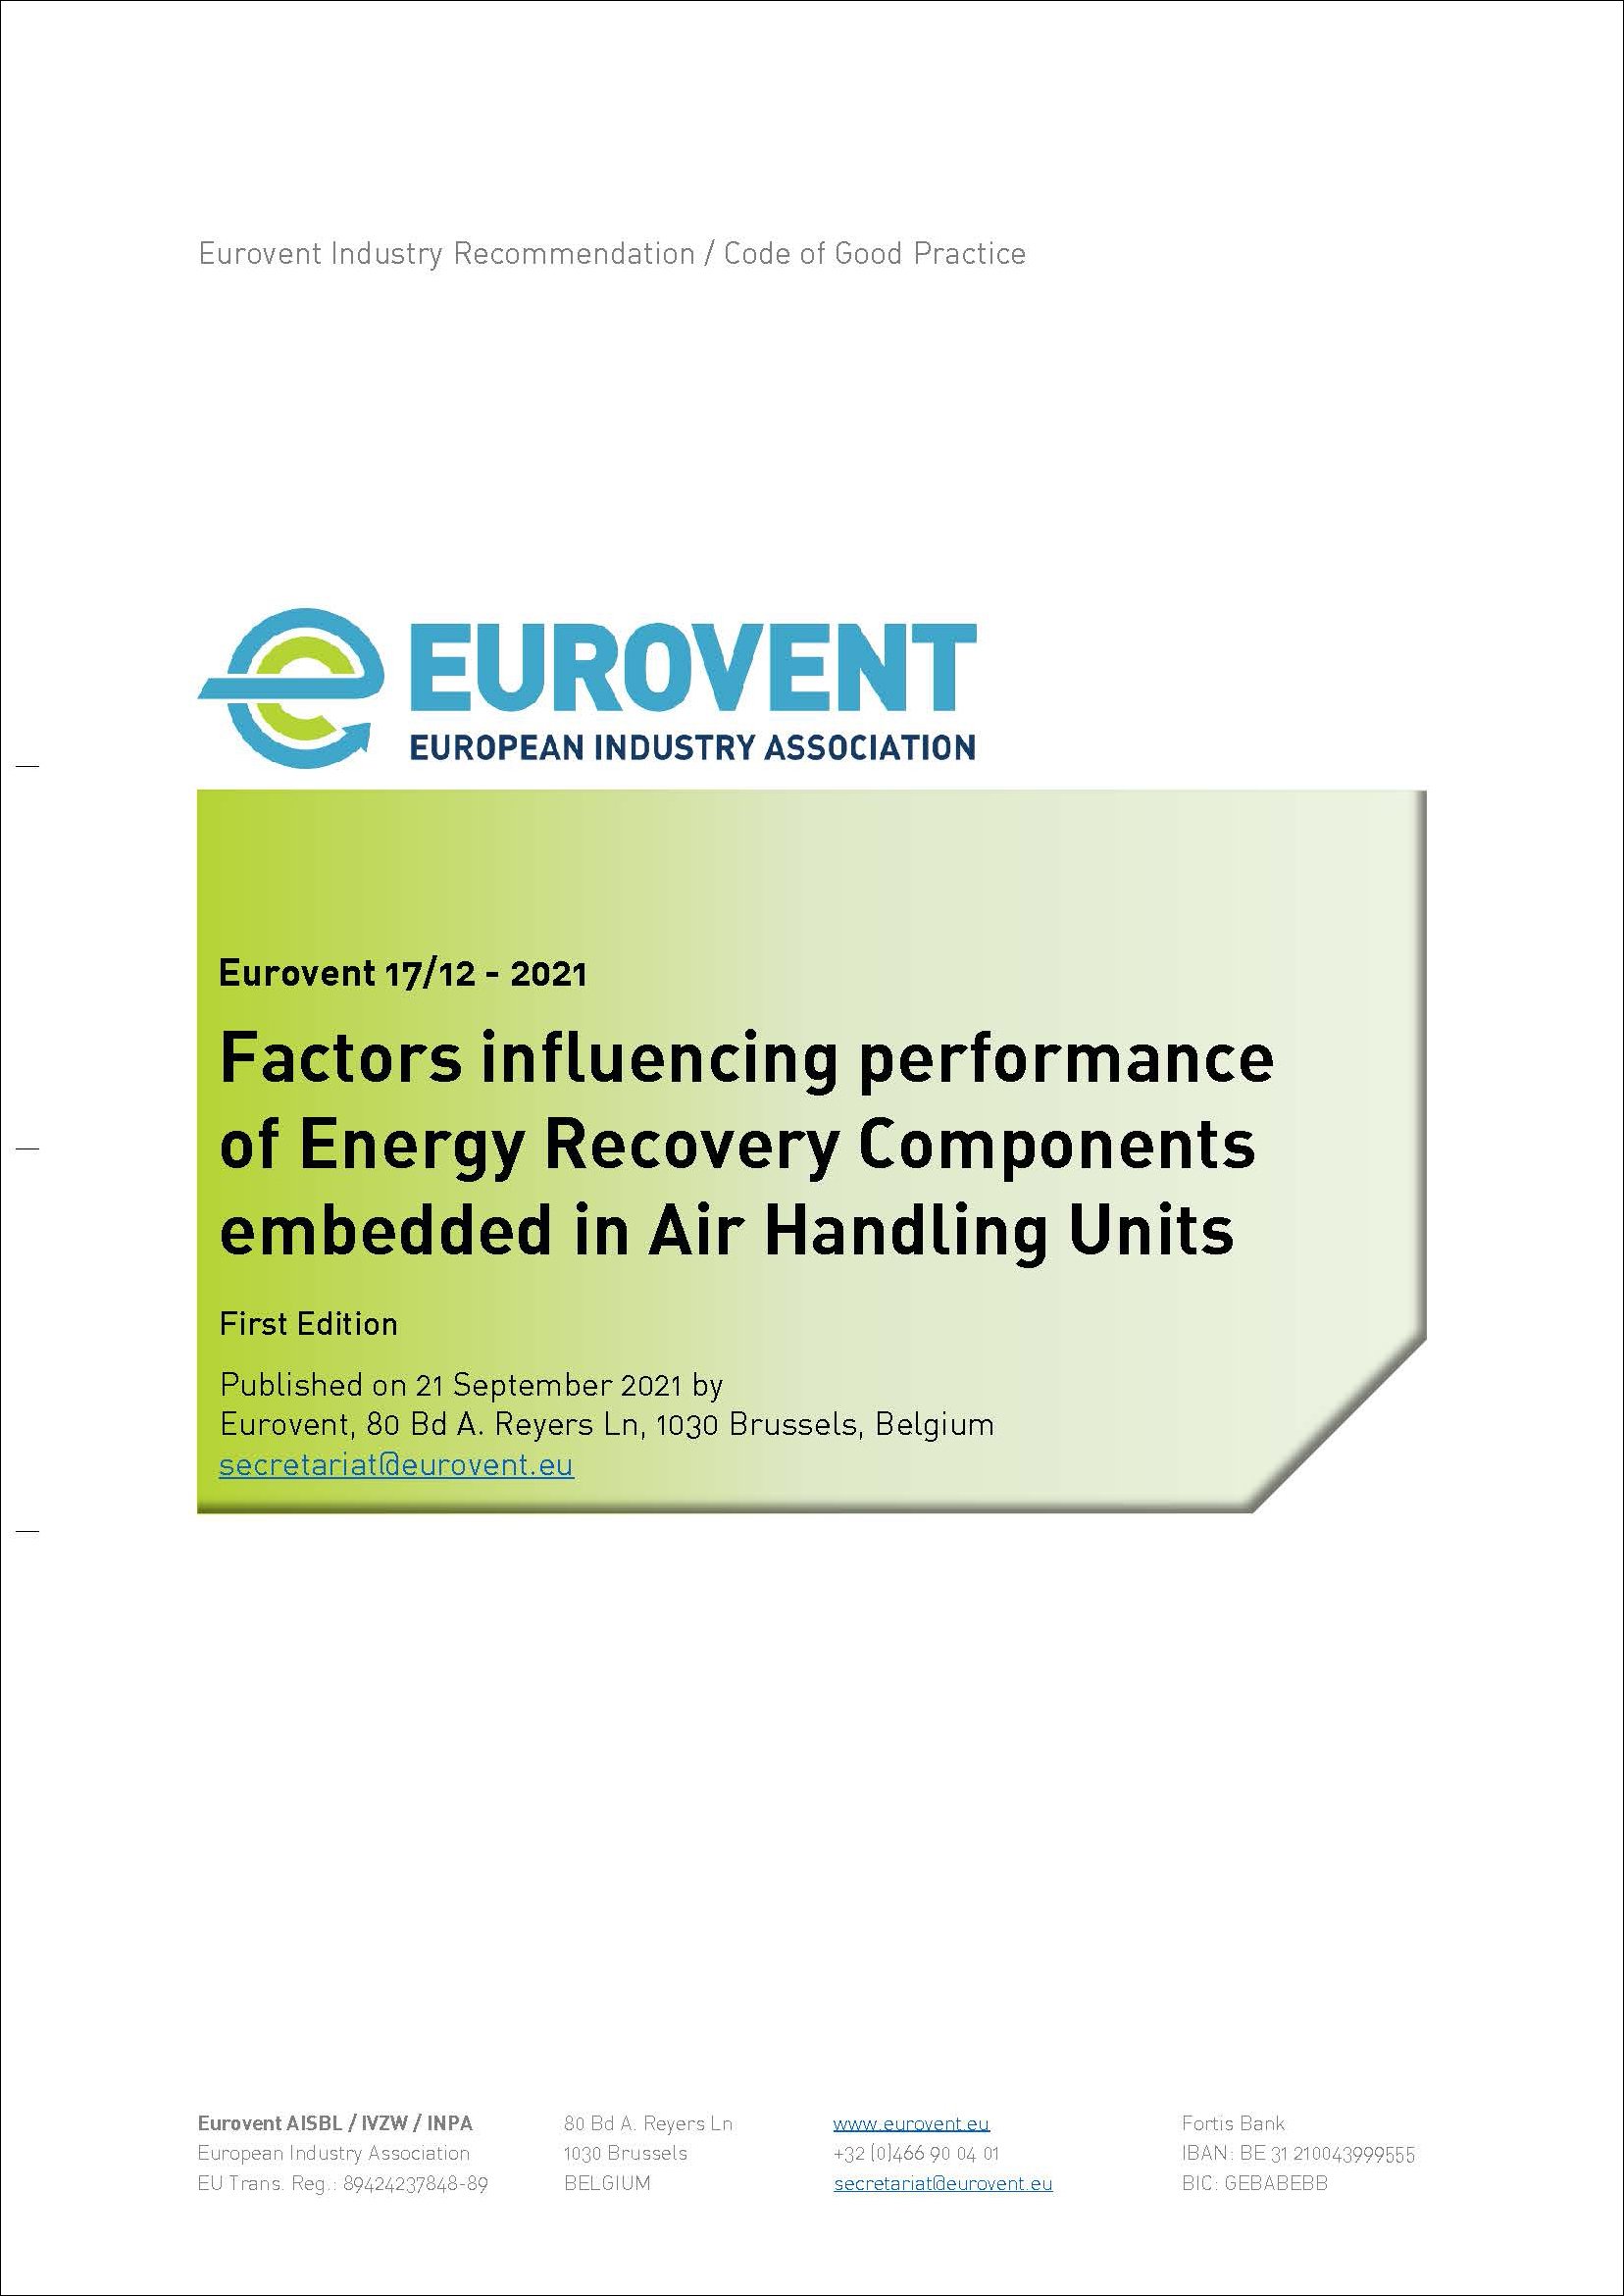 Eurovent REC 17-12 - Factor influencing performance of ERC - 2021 - EN.jpg